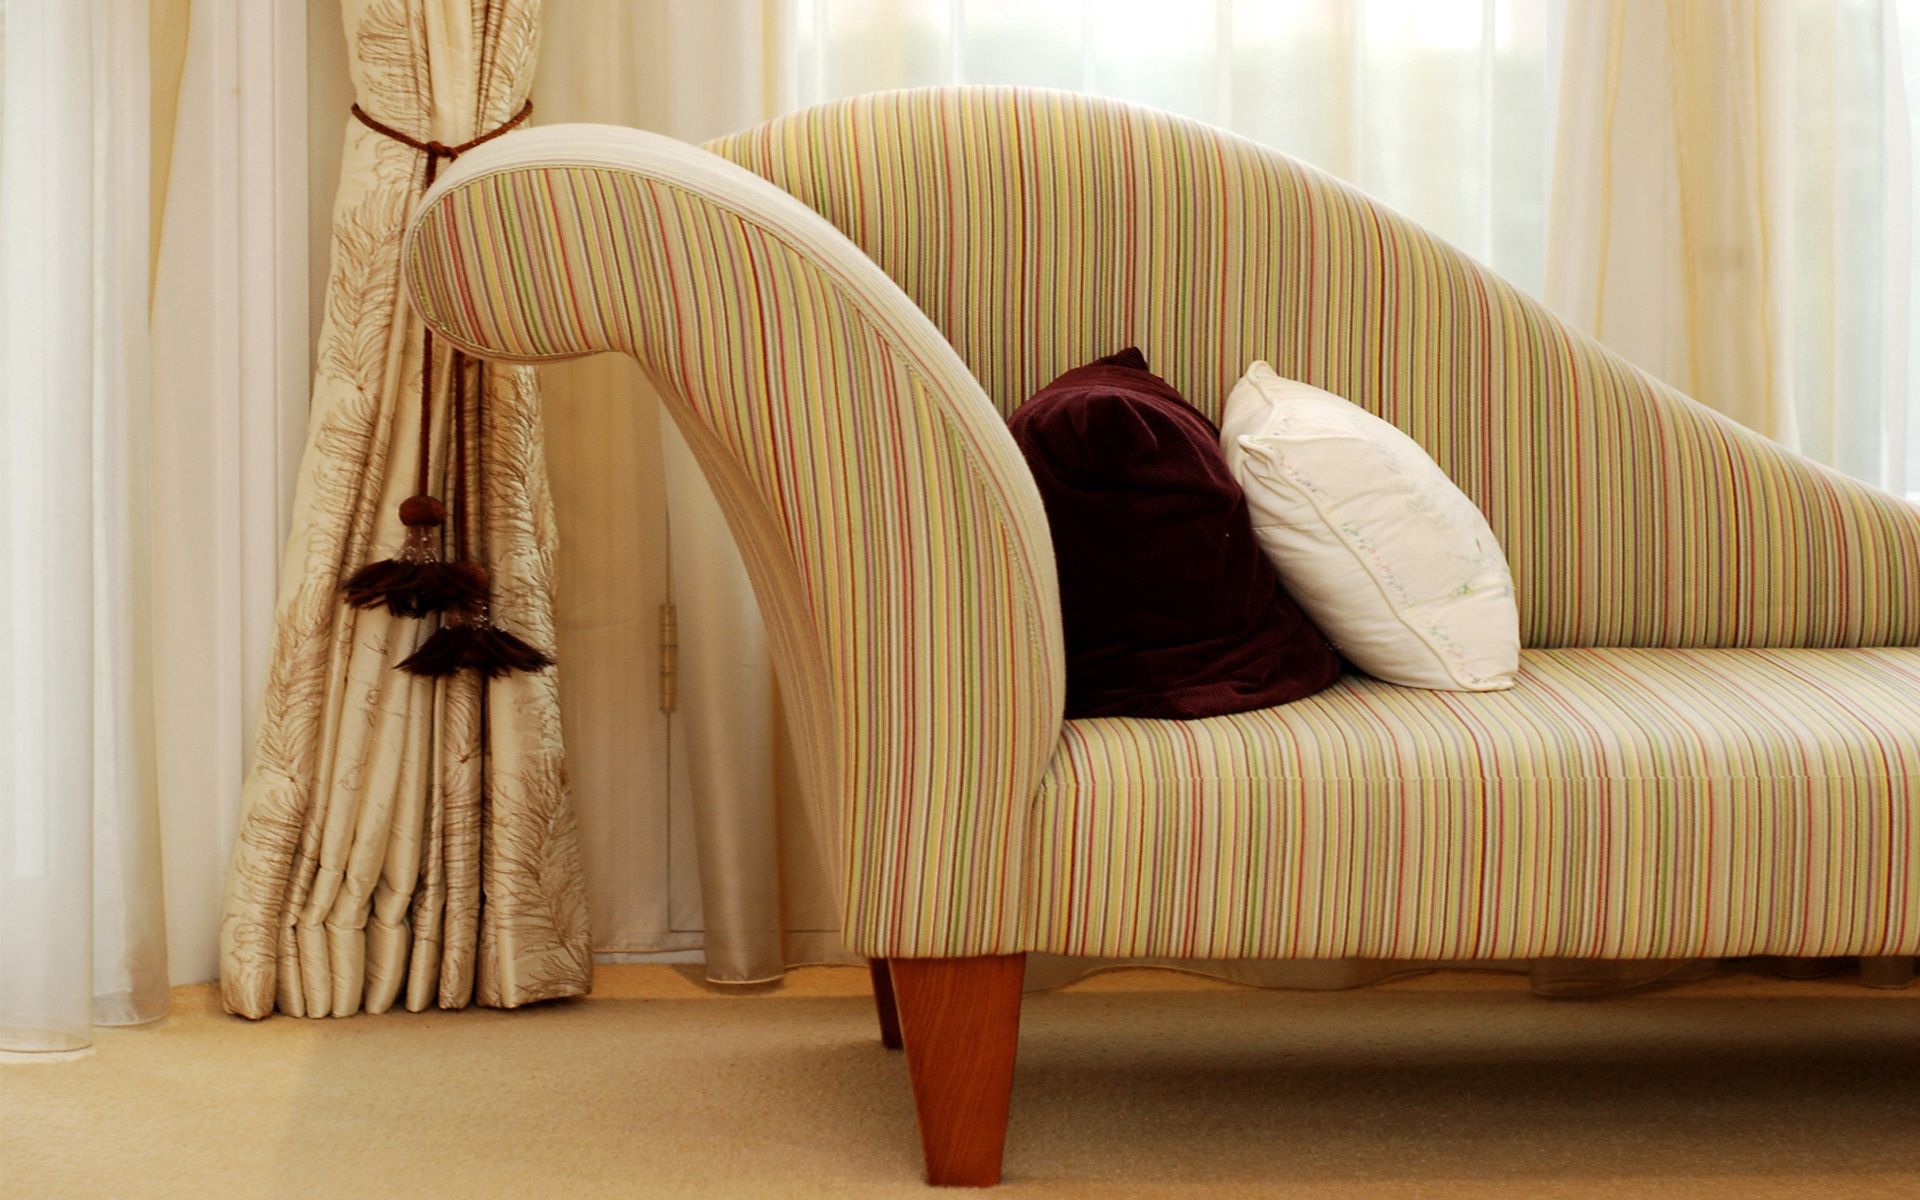 miscellanea, miscellaneous, style, sofa, furniture, cushions, pillows